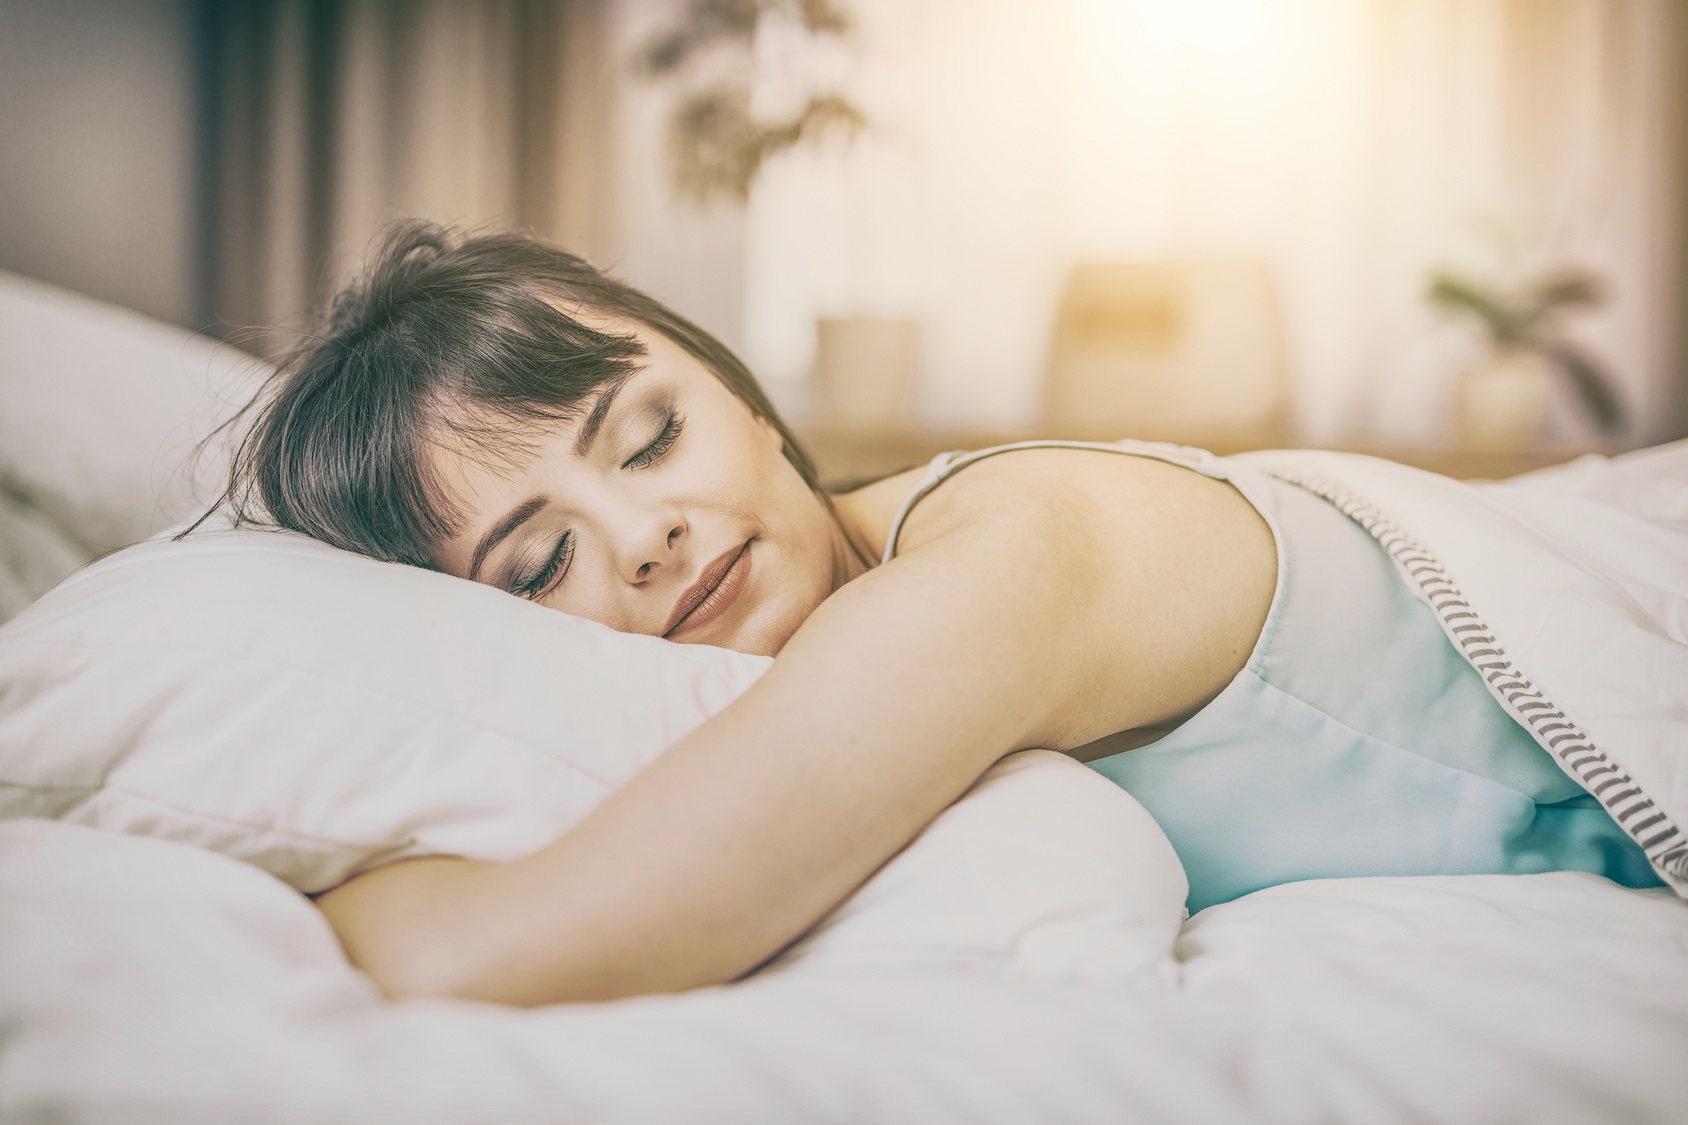 Evo kako vaš položaj spavanja utječe na vaše zdravlje